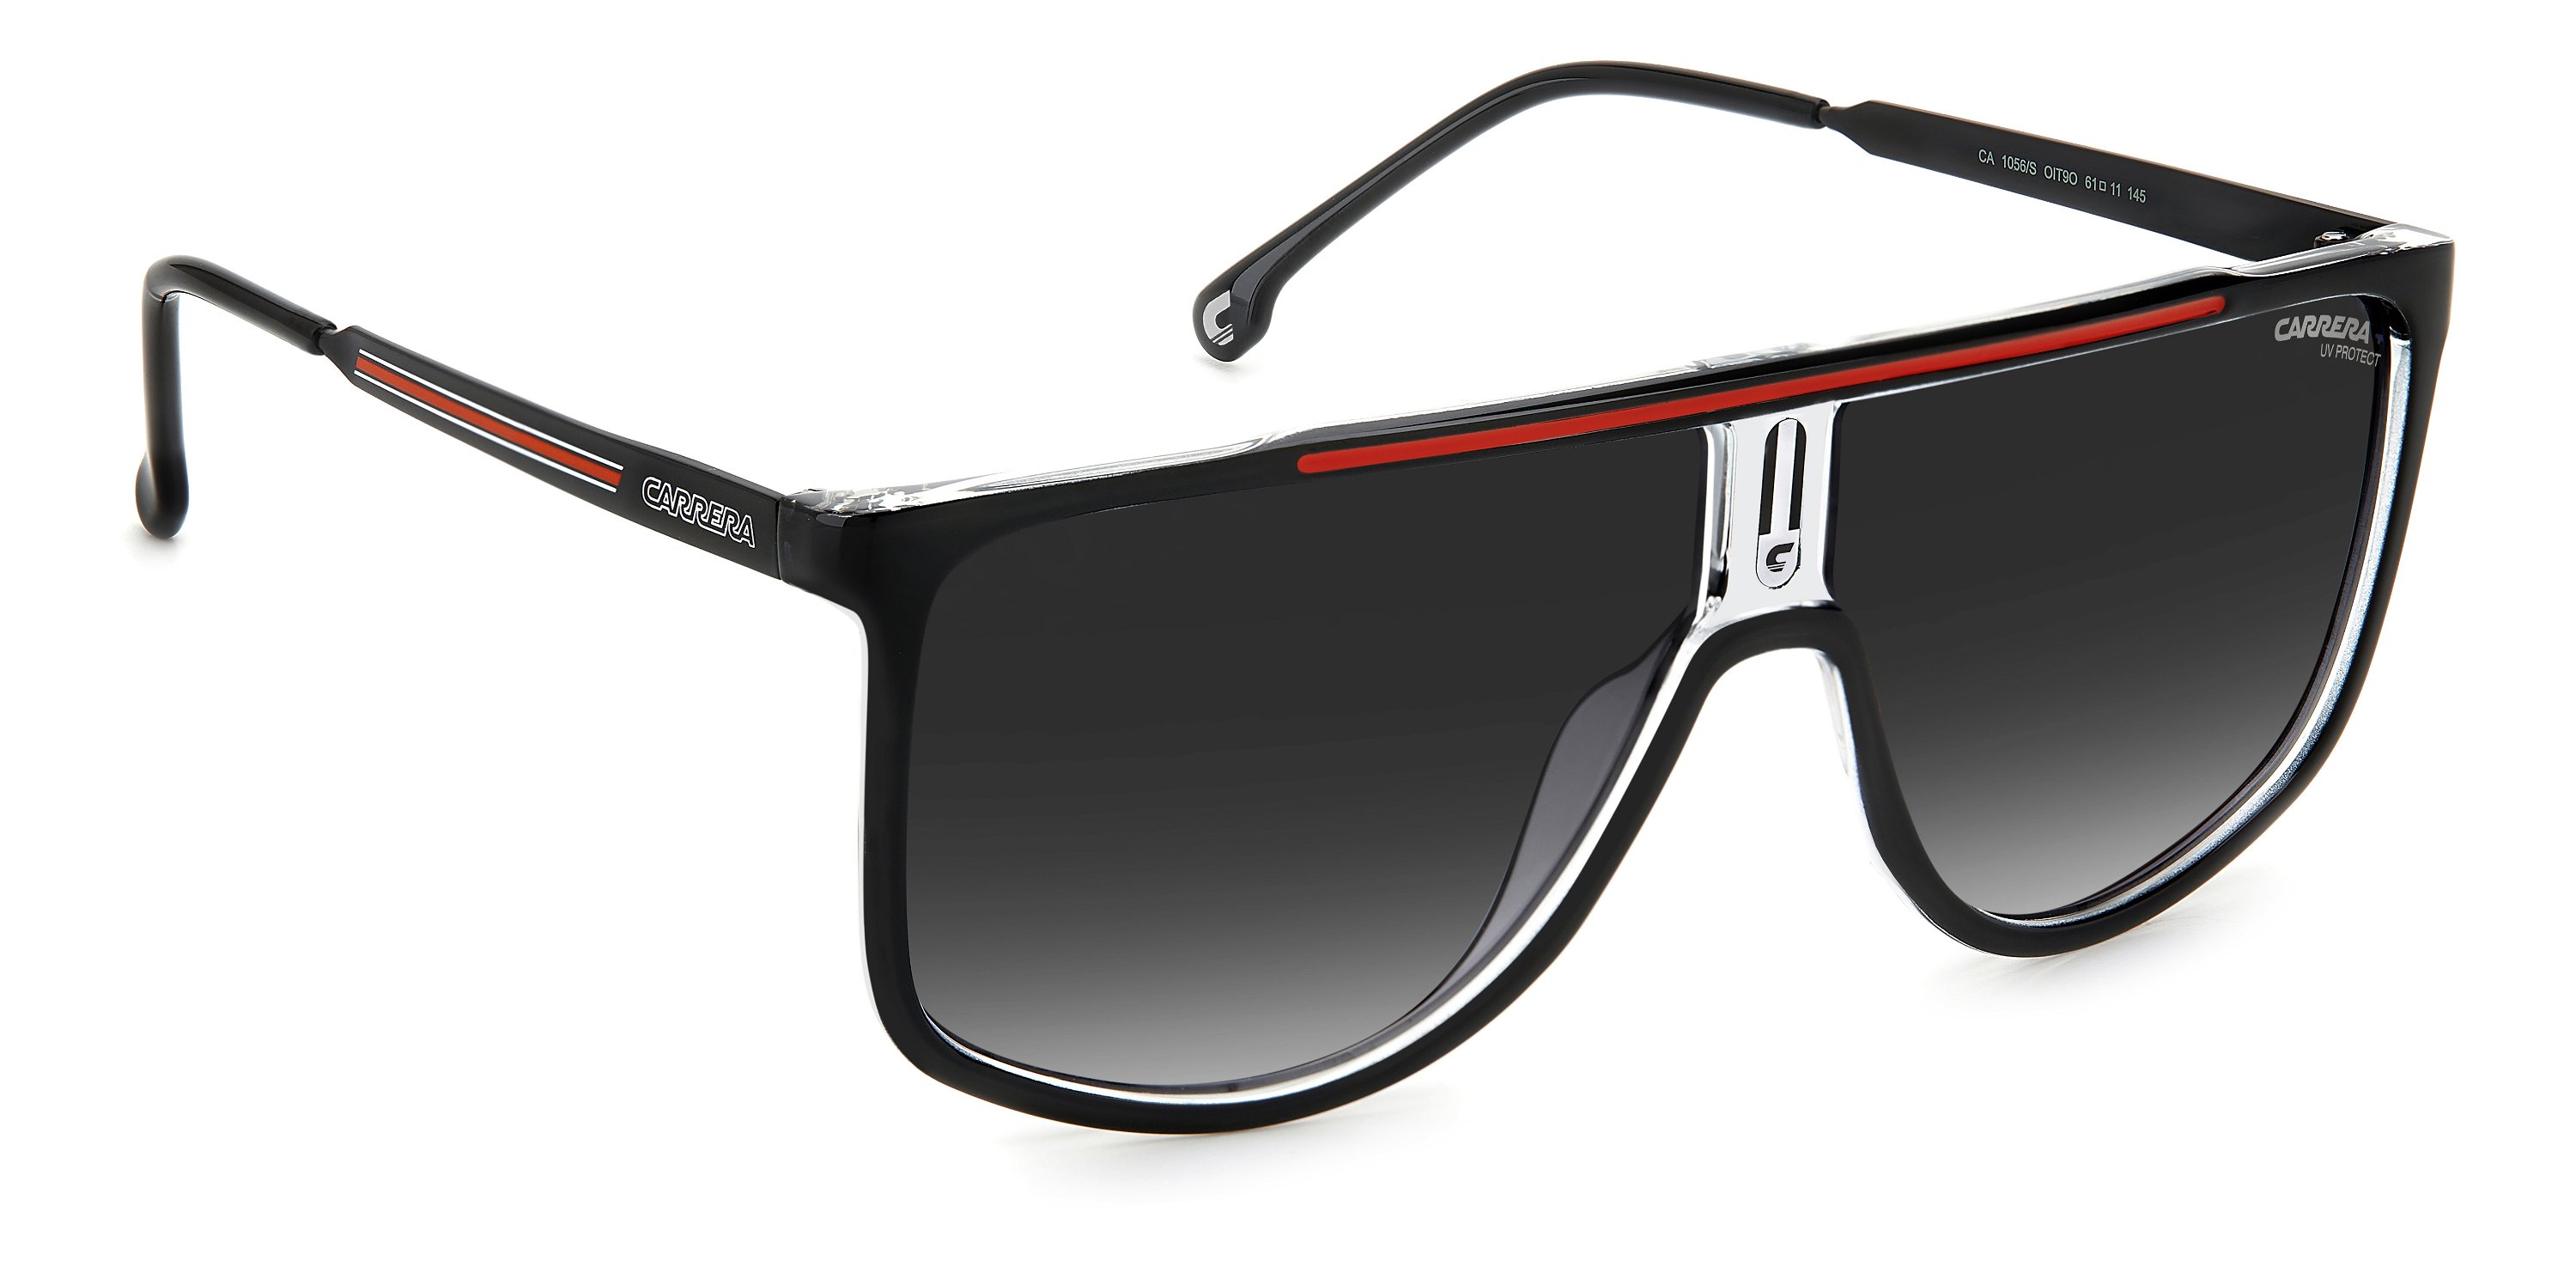 Carrera Sonnenbrille 1056/S OIT schwarz rot